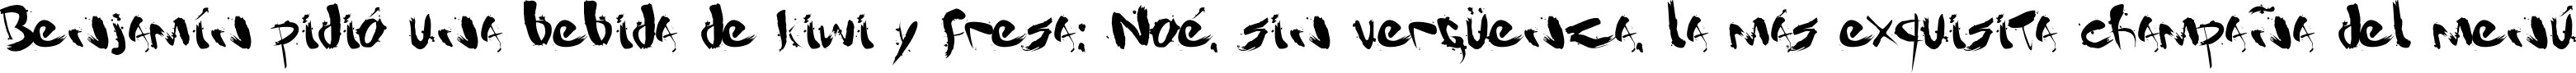 Пример написания шрифтом Gantz font текста на испанском